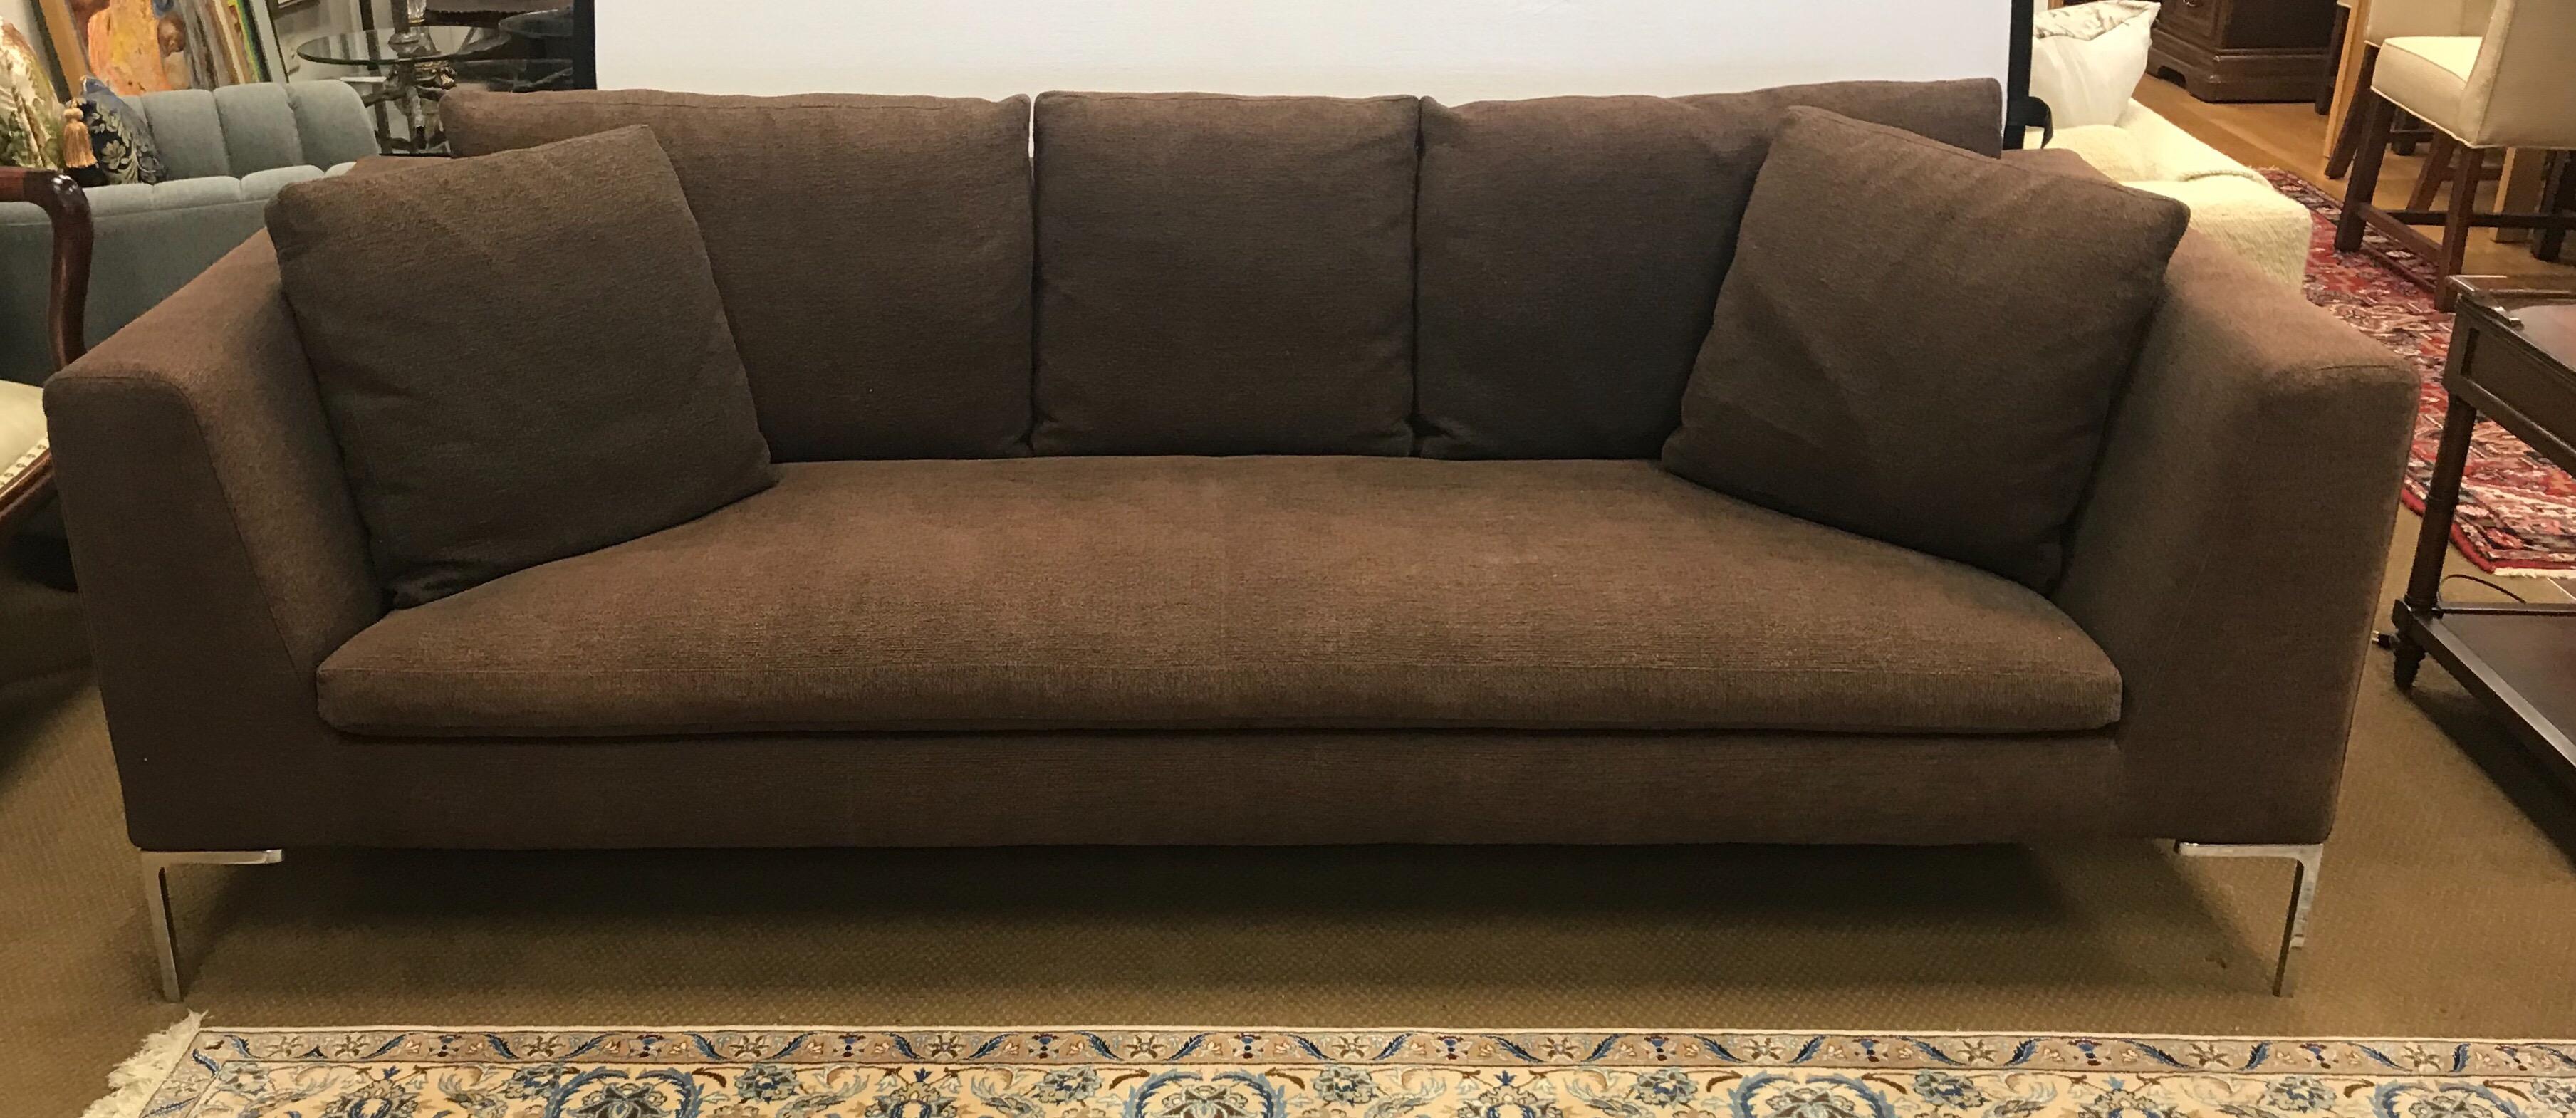 b&b italia charles sofa price